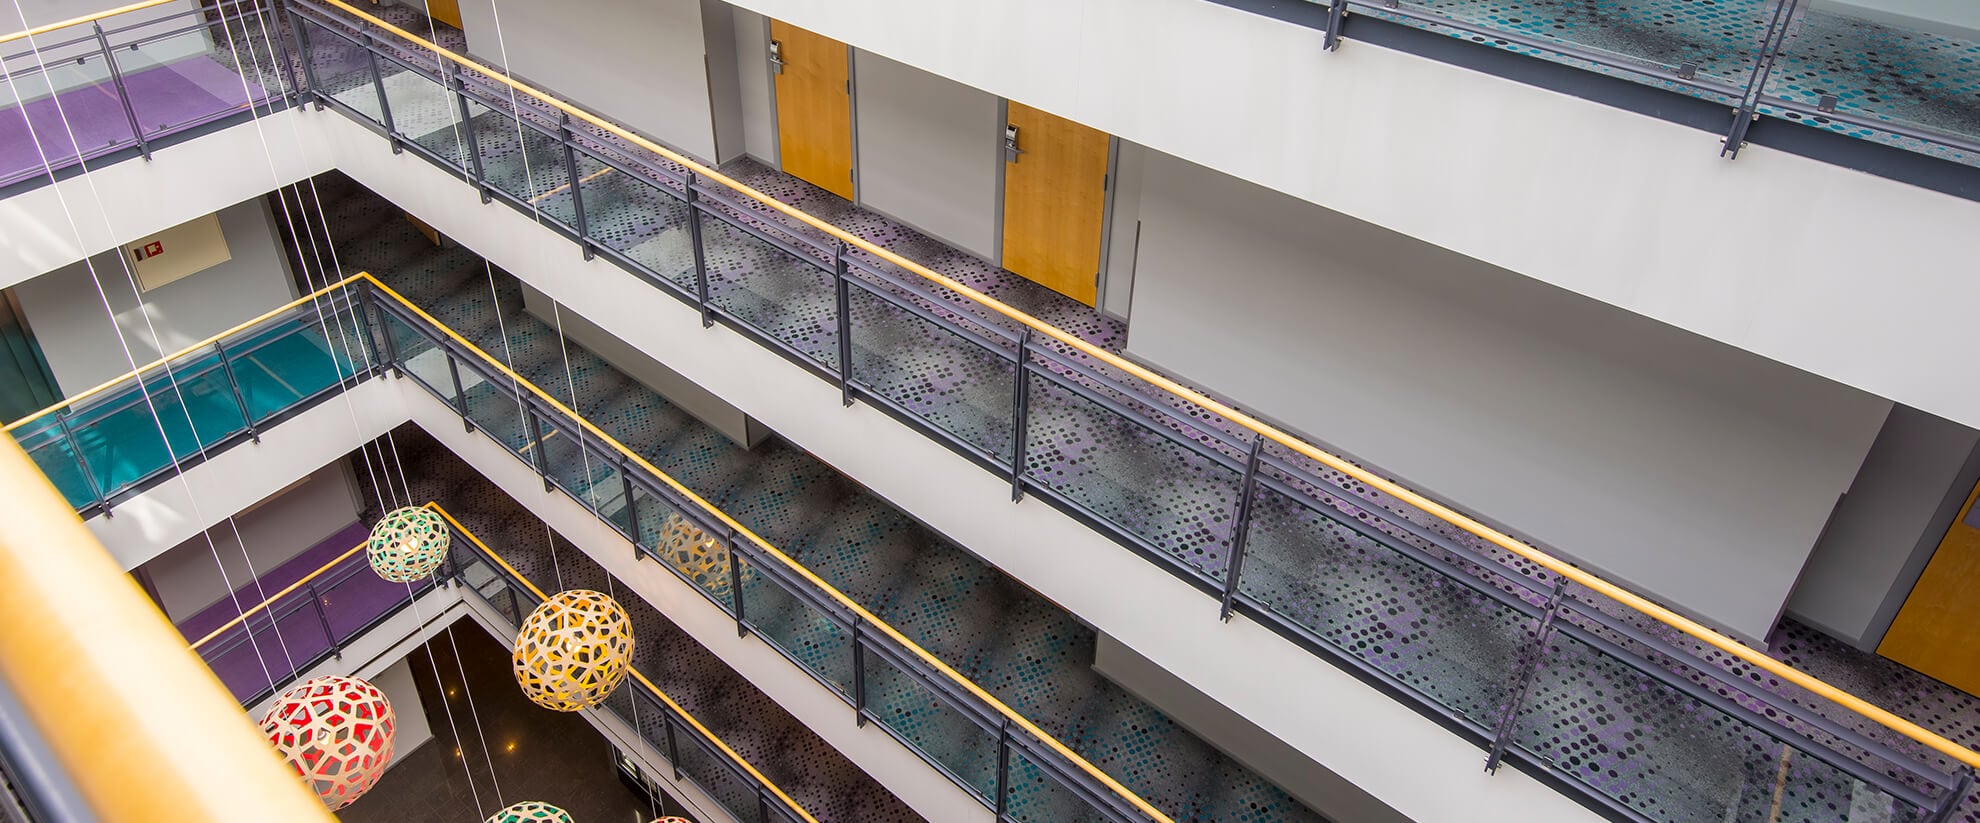 Dansk Wilton carpet solutions for First Hotel in Copenhagen